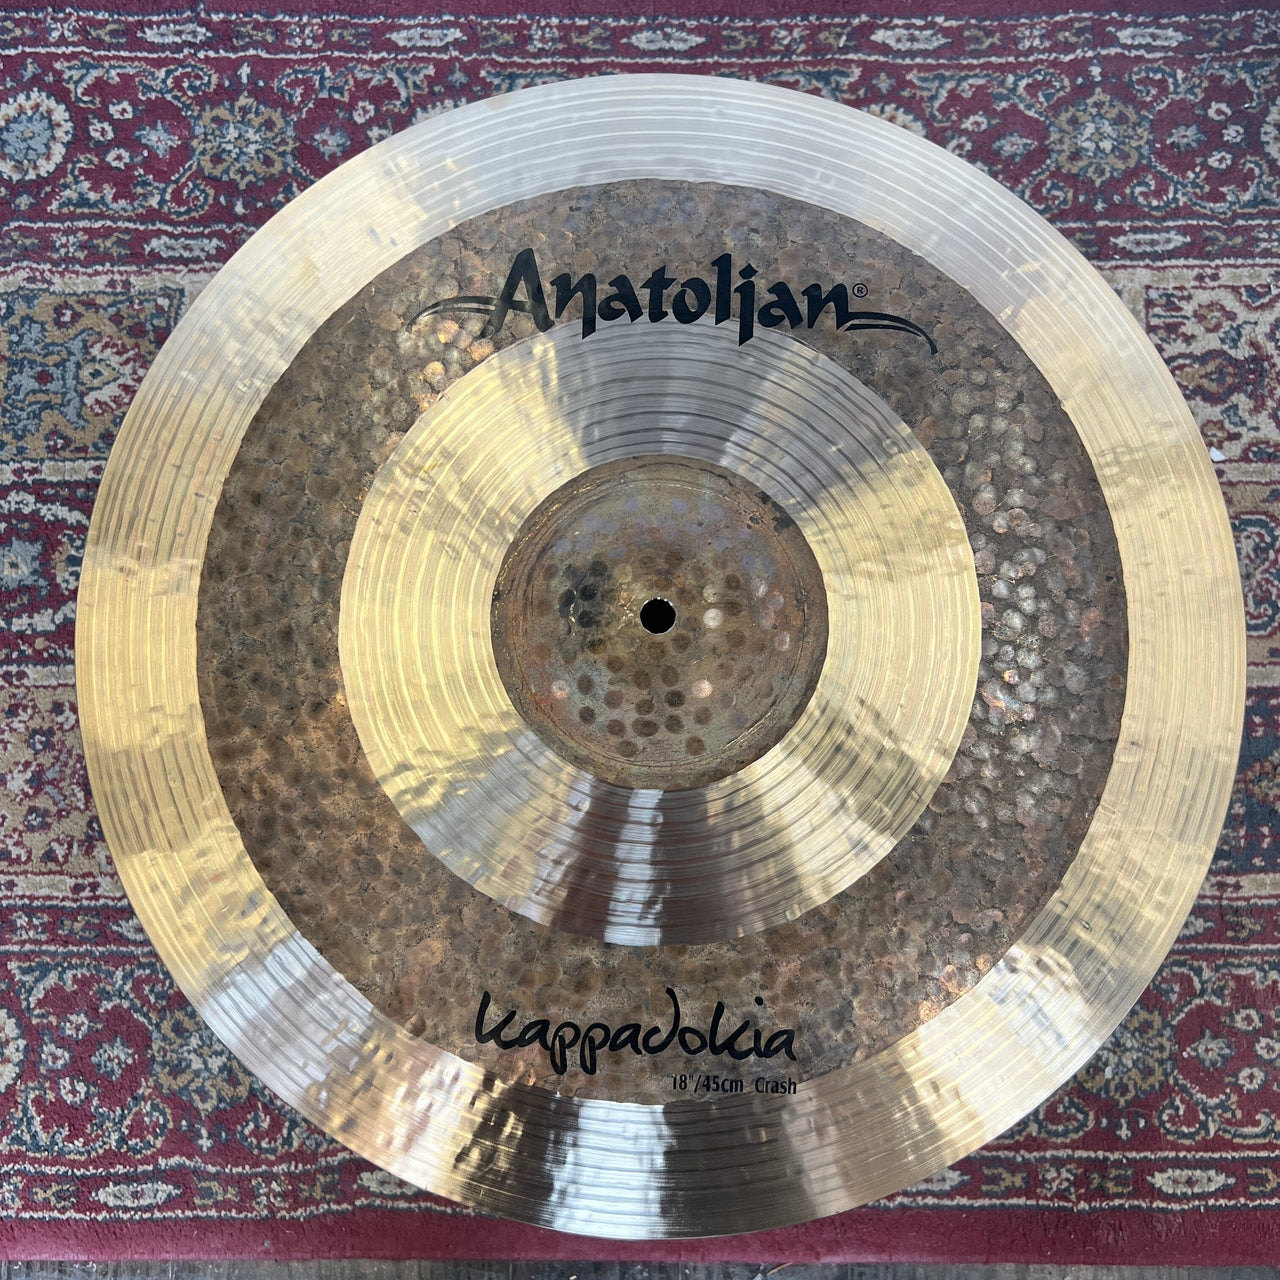 Anatolian 18" Kappadokia Crash drum kit Anatolian 